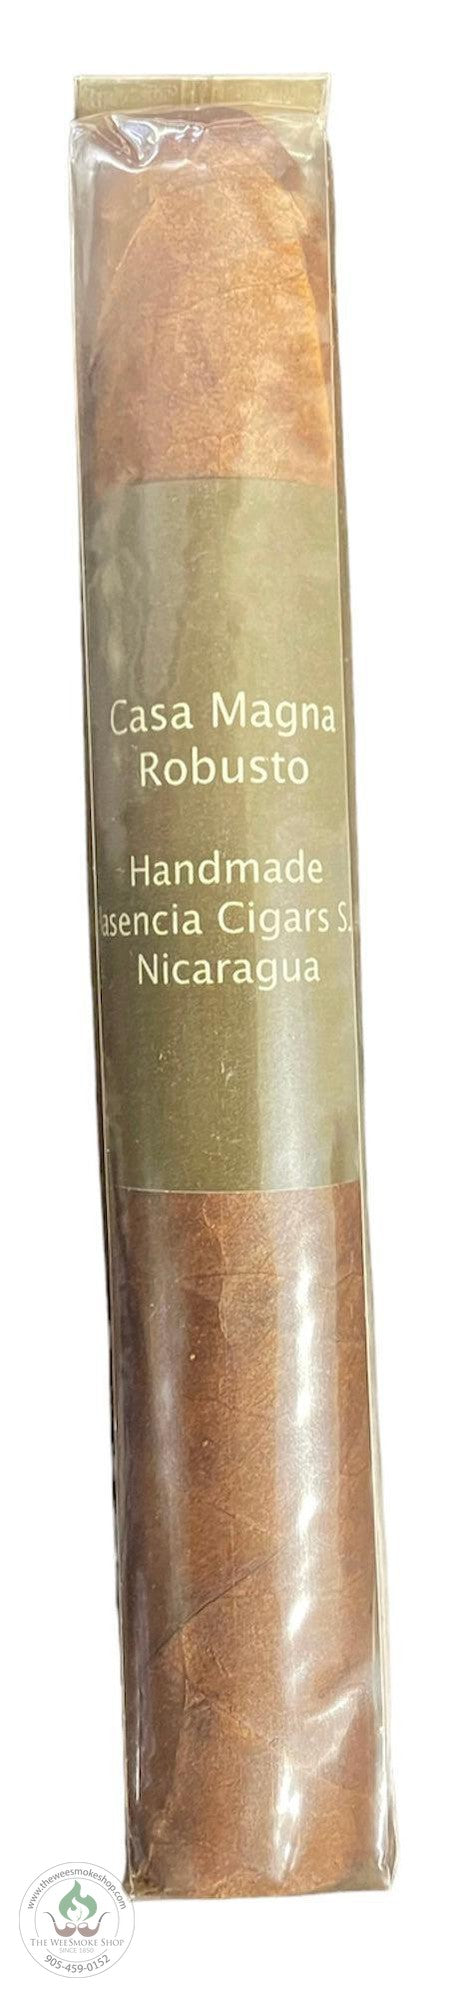 Casa Magna - Robusto - The Wee Smoke Shop